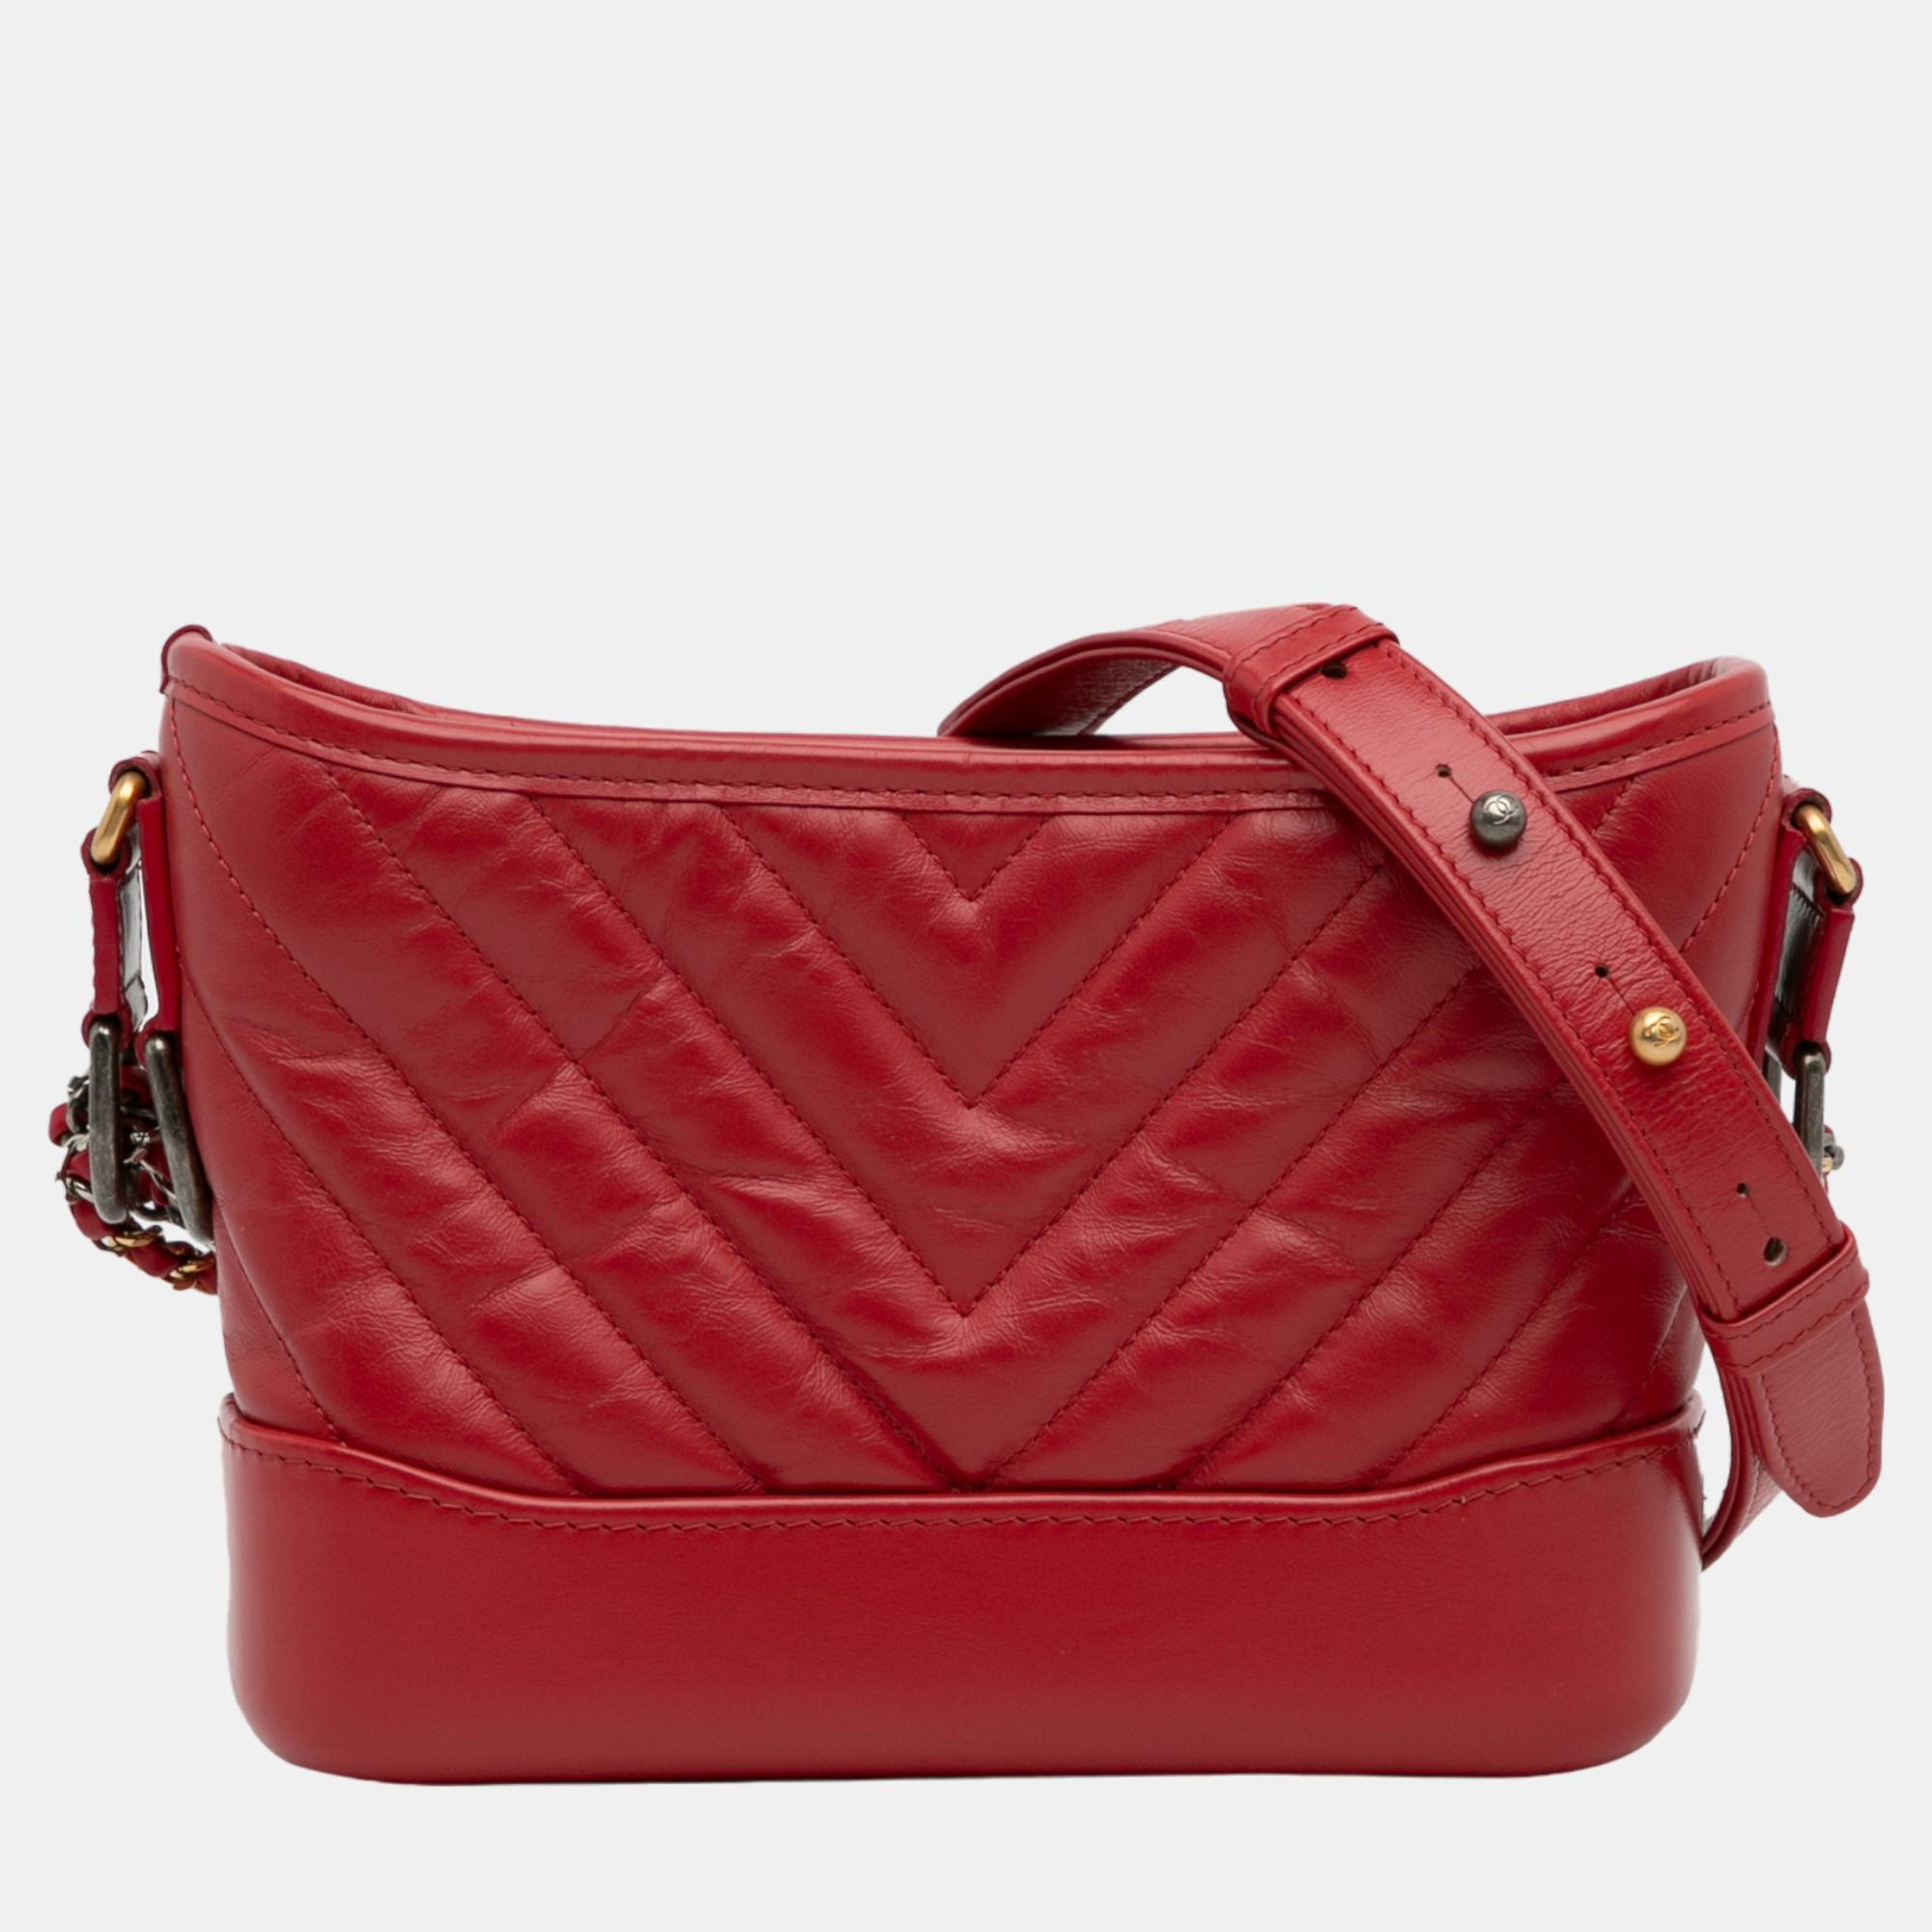 Chanel red small lambskin gabrielle crossbody bag